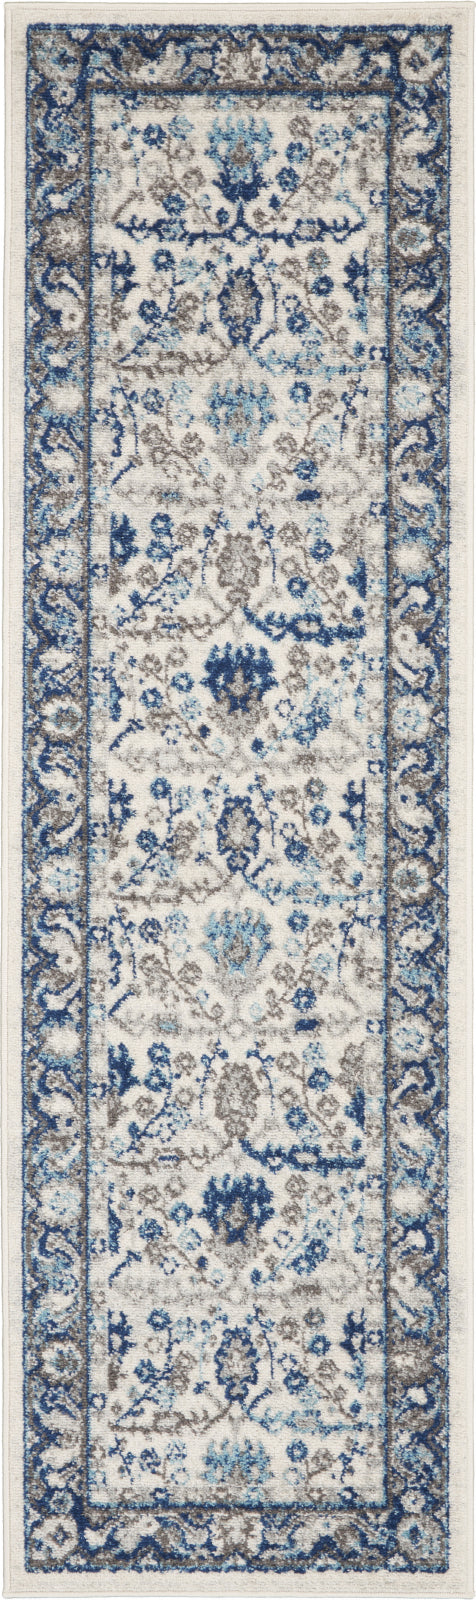 Persian Vintage PRV05 Ivory/Grey/Blue Area Rug by Nourison main image